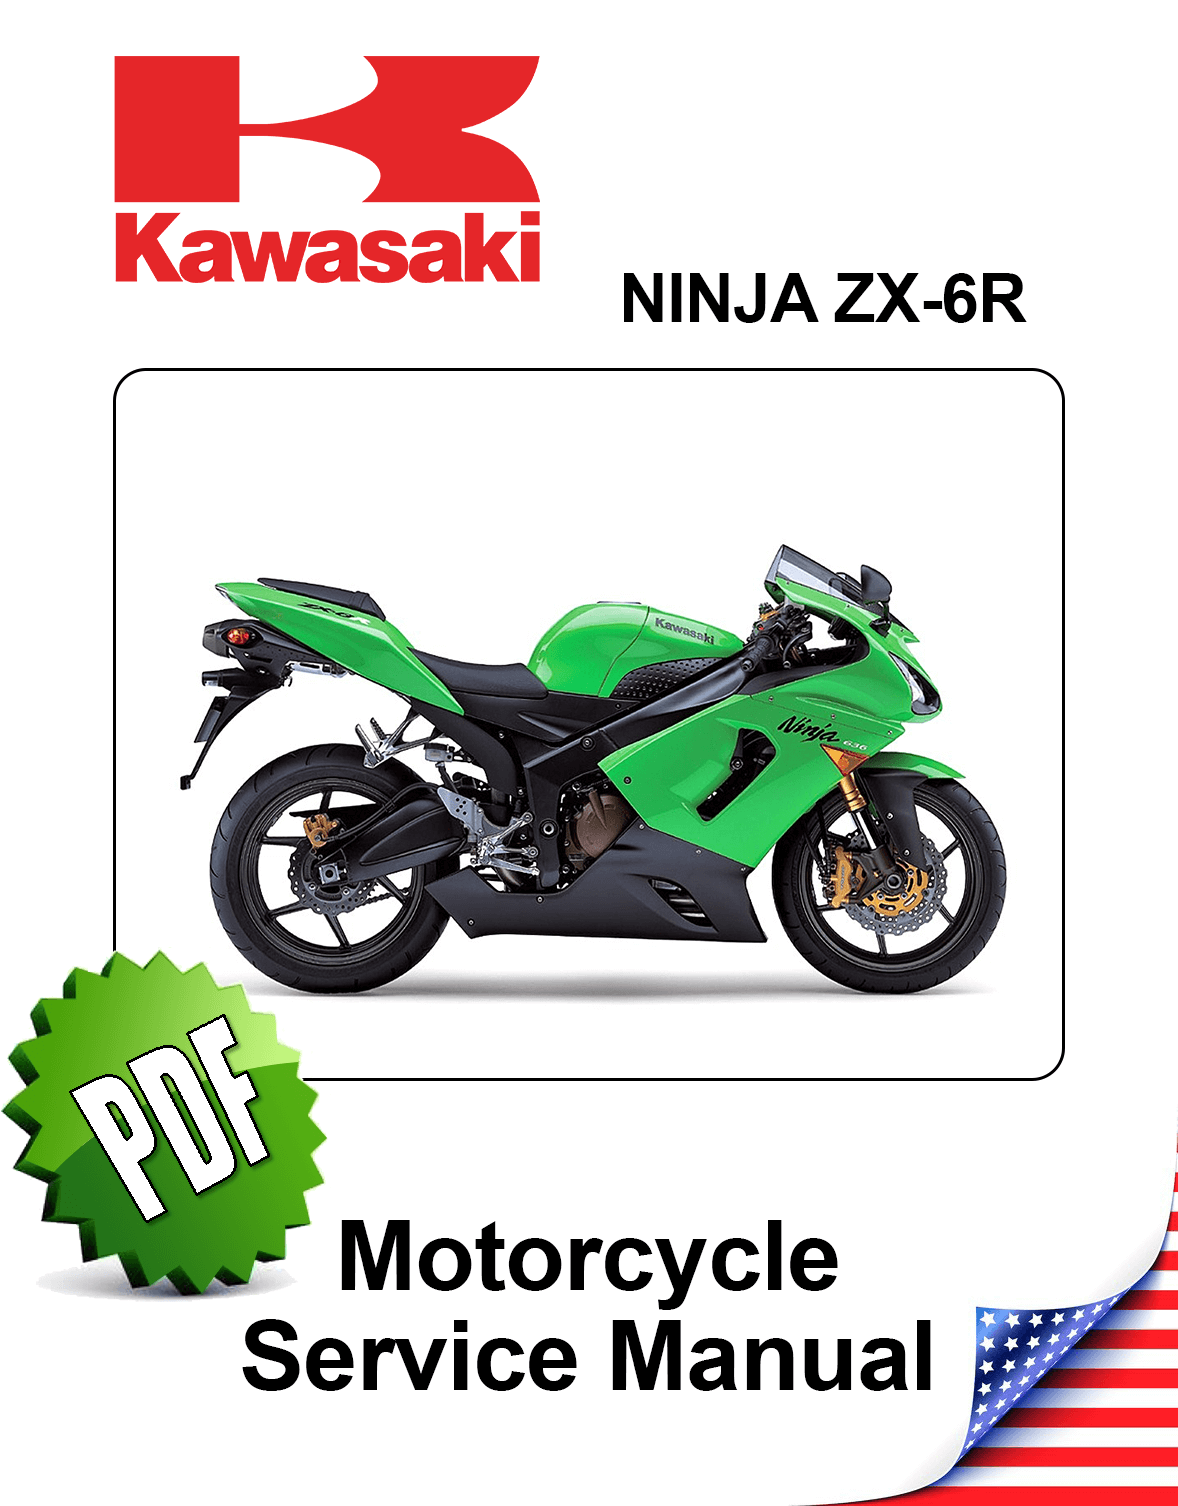 Kawasaki Ninja ZX6R C1 service manual Models 2005 to 2006 PDF download